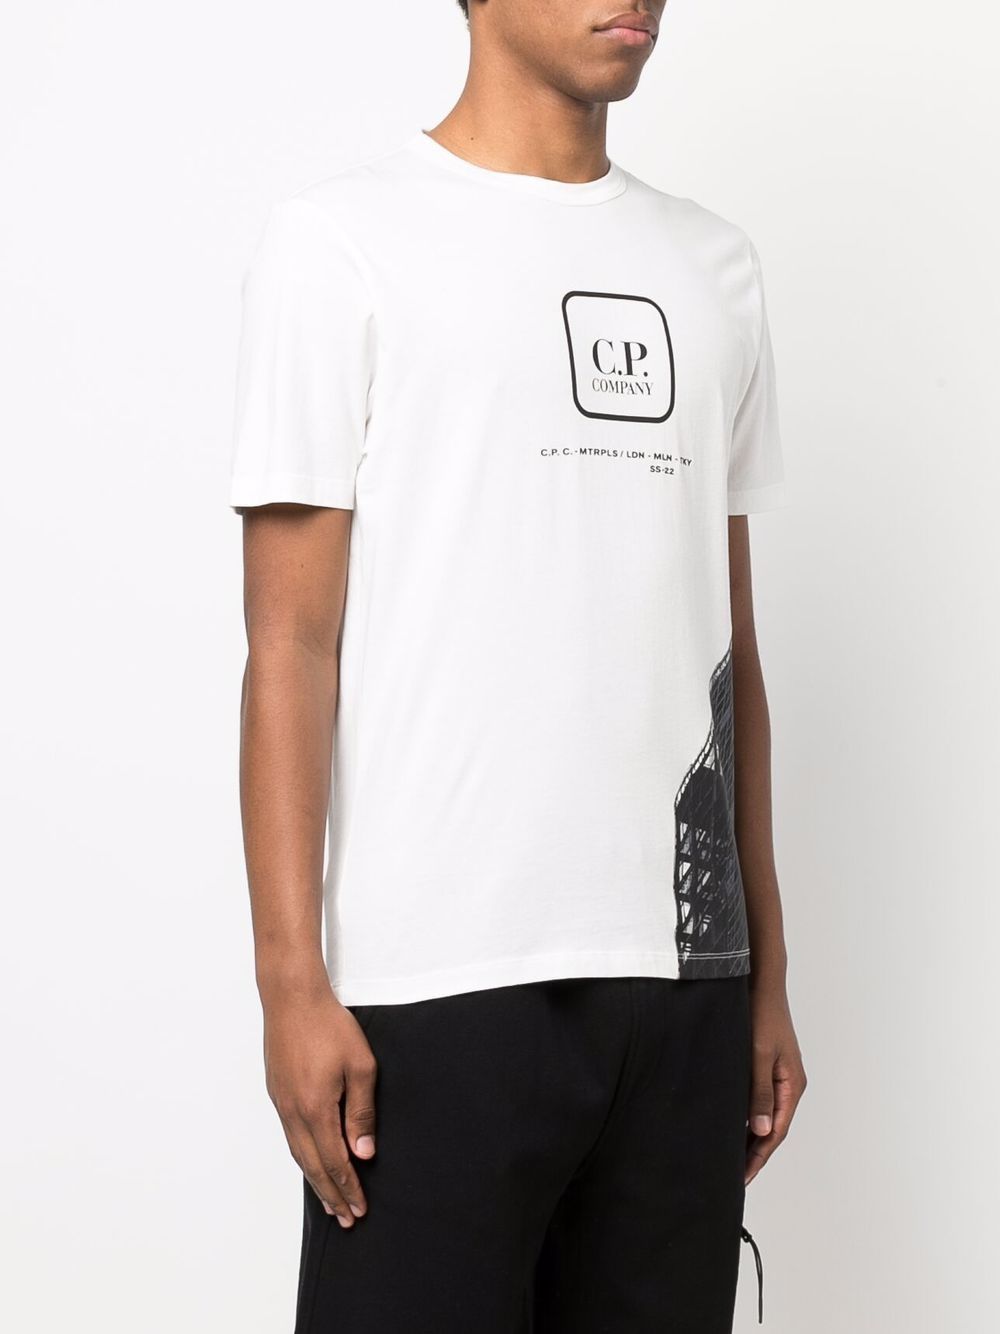 C.P. COMPANY Logo Print T-Shirt White - MAISONDEFASHION.COM